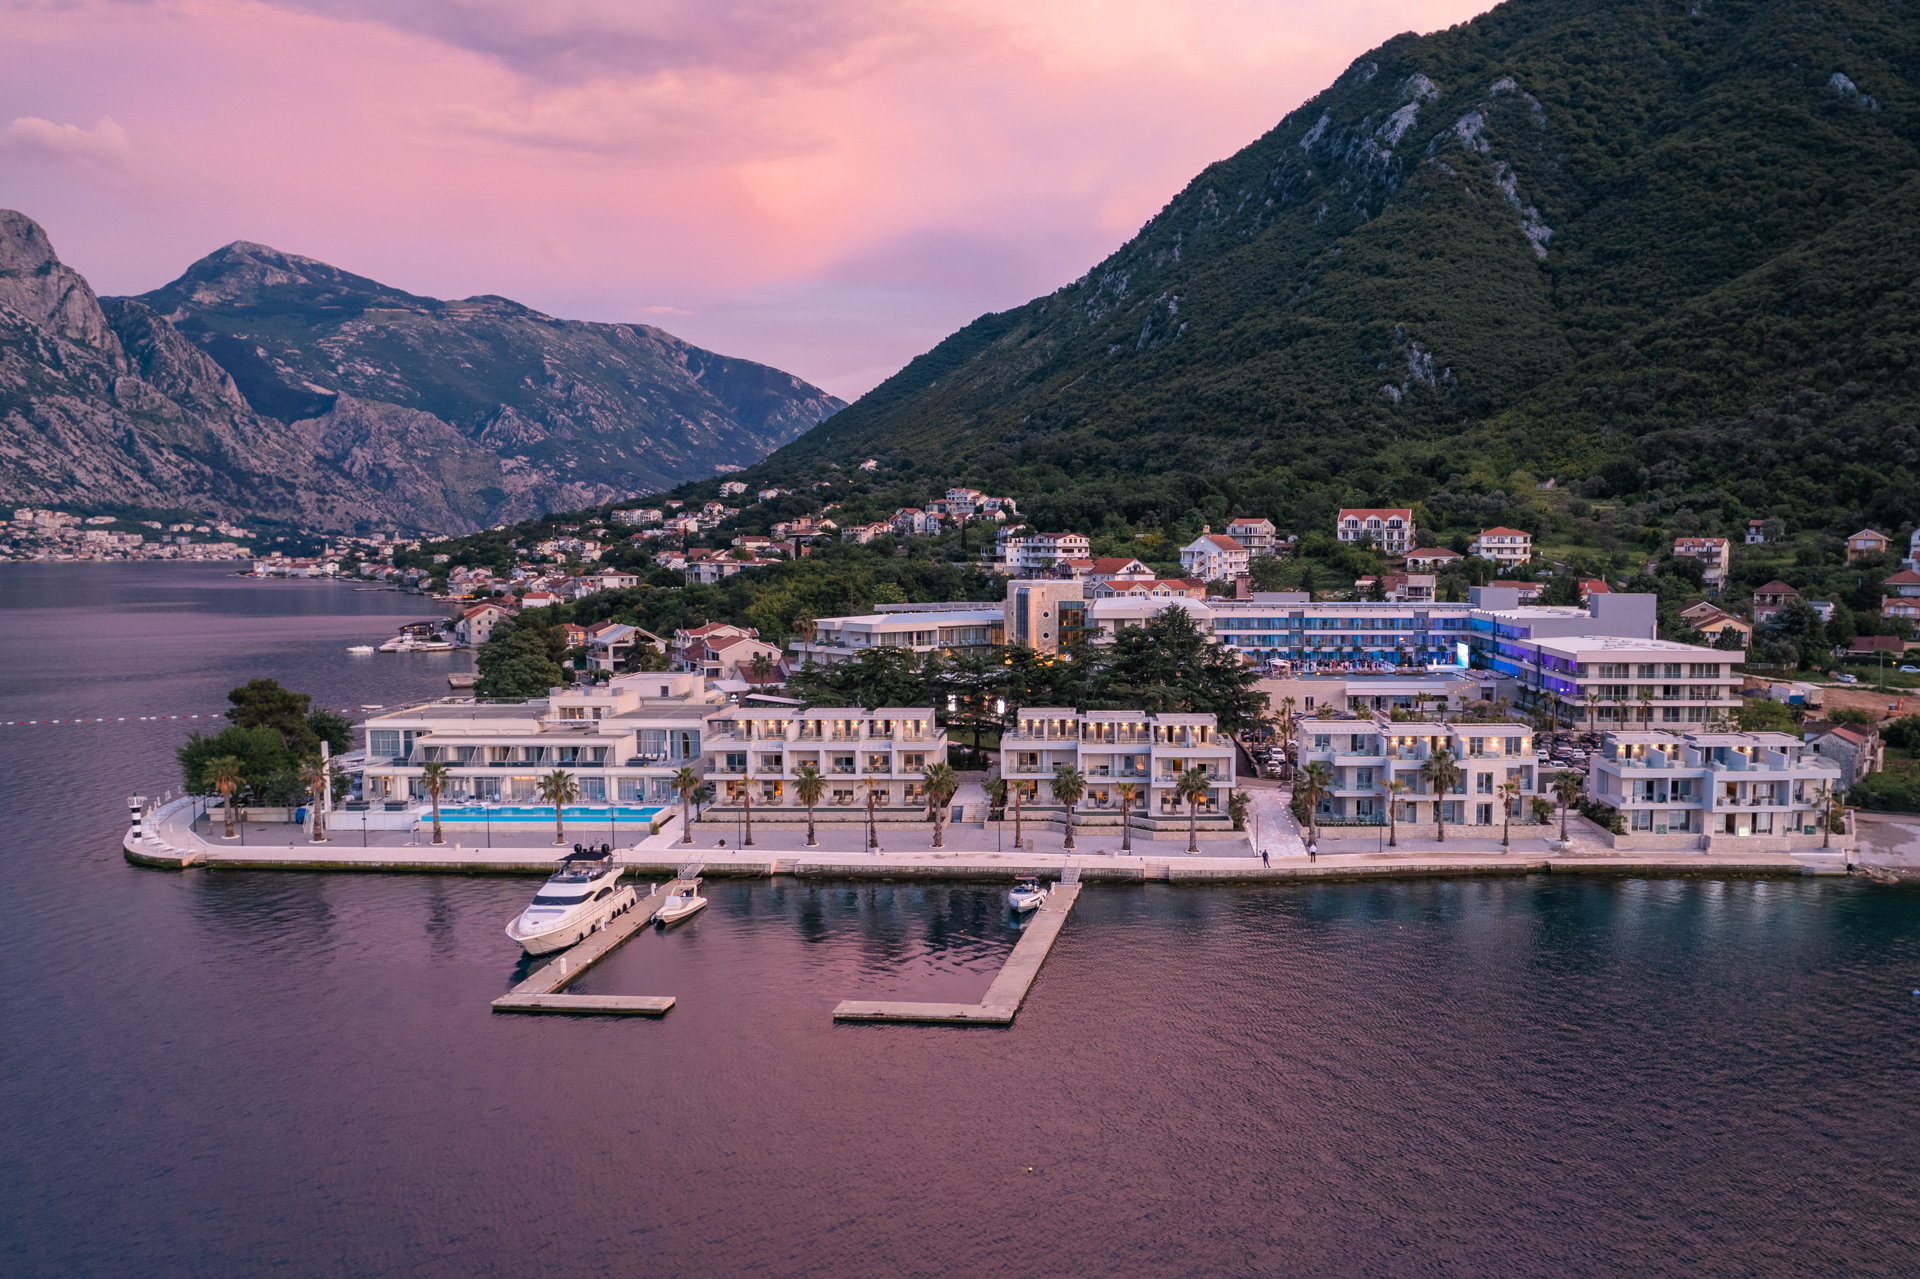 Novi hotel u Boki kotorskoj: Otvoren prvi Hyatt u Crnoj Gori